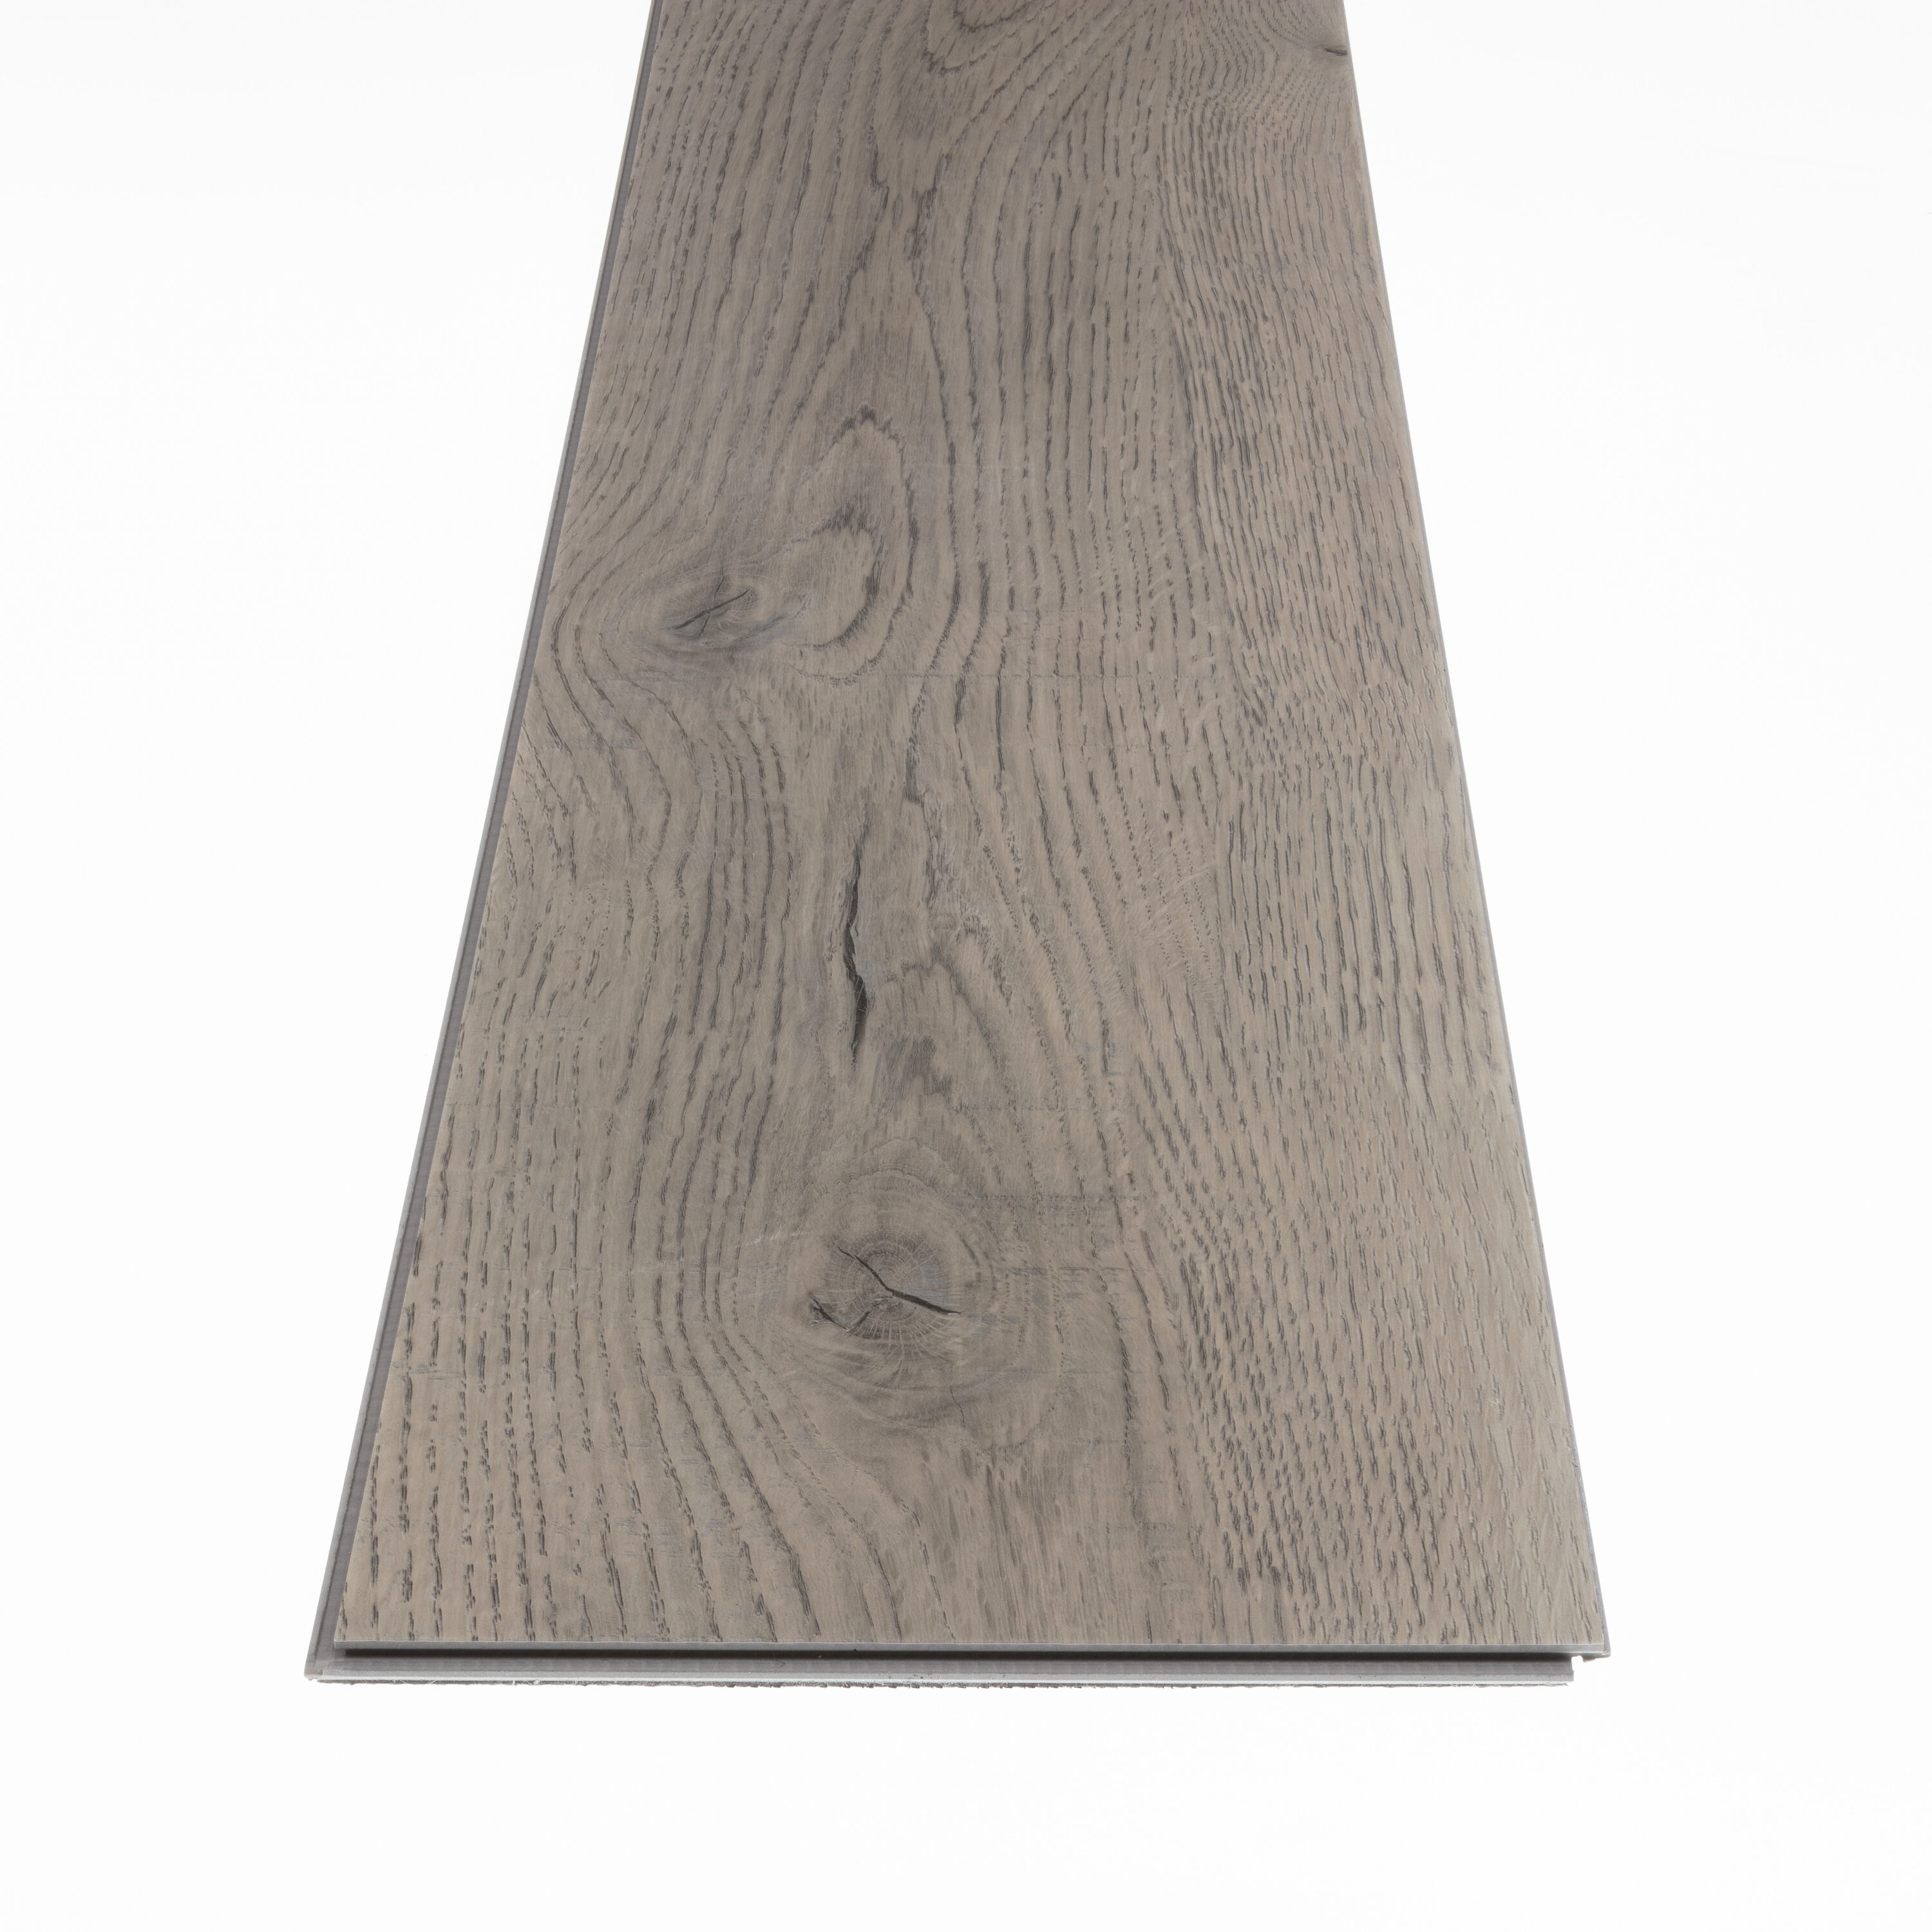 STAINMASTER Barnes Oak 12-mil x 7-3/32-in W x 47-in L Interlocking Luxury Vinyl Plank Flooring (17.33-sq ft/ Carton) in Gray | LSM02-920